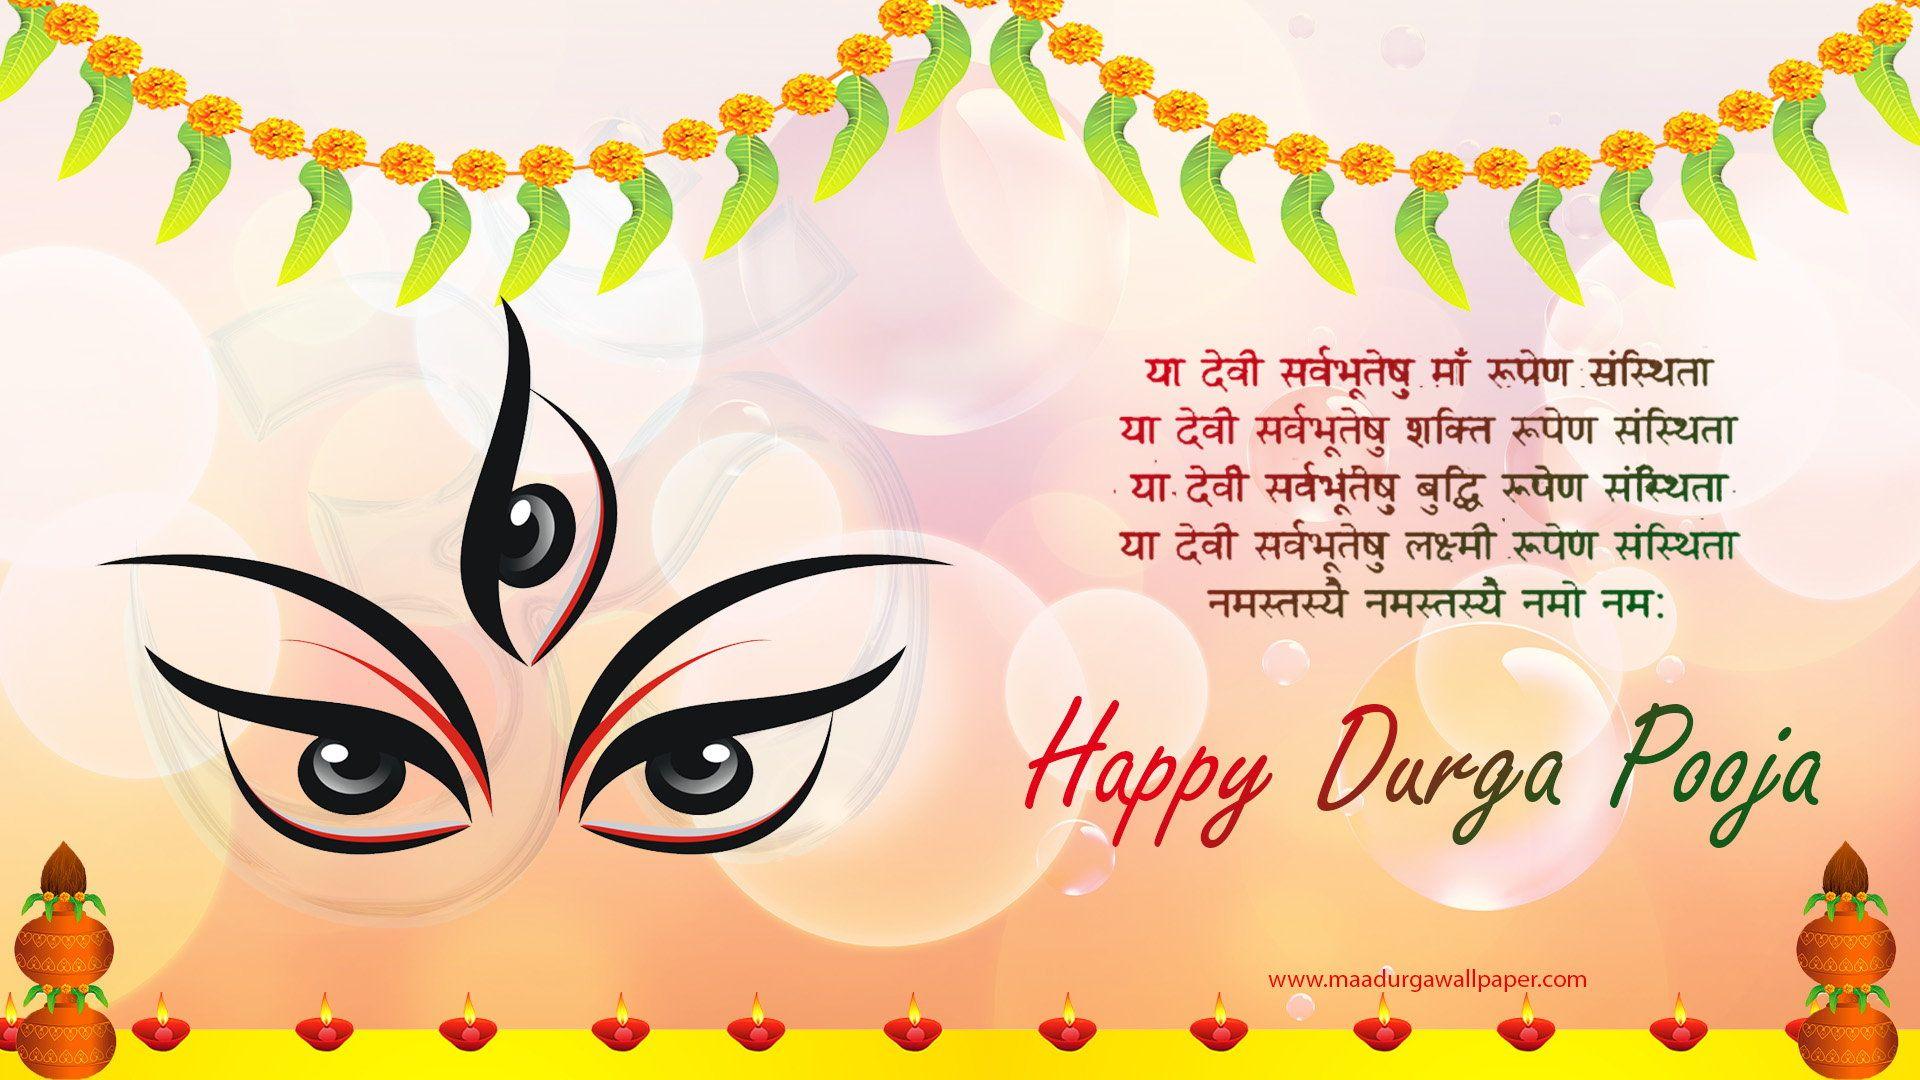 happy durga puja wallpaper free download